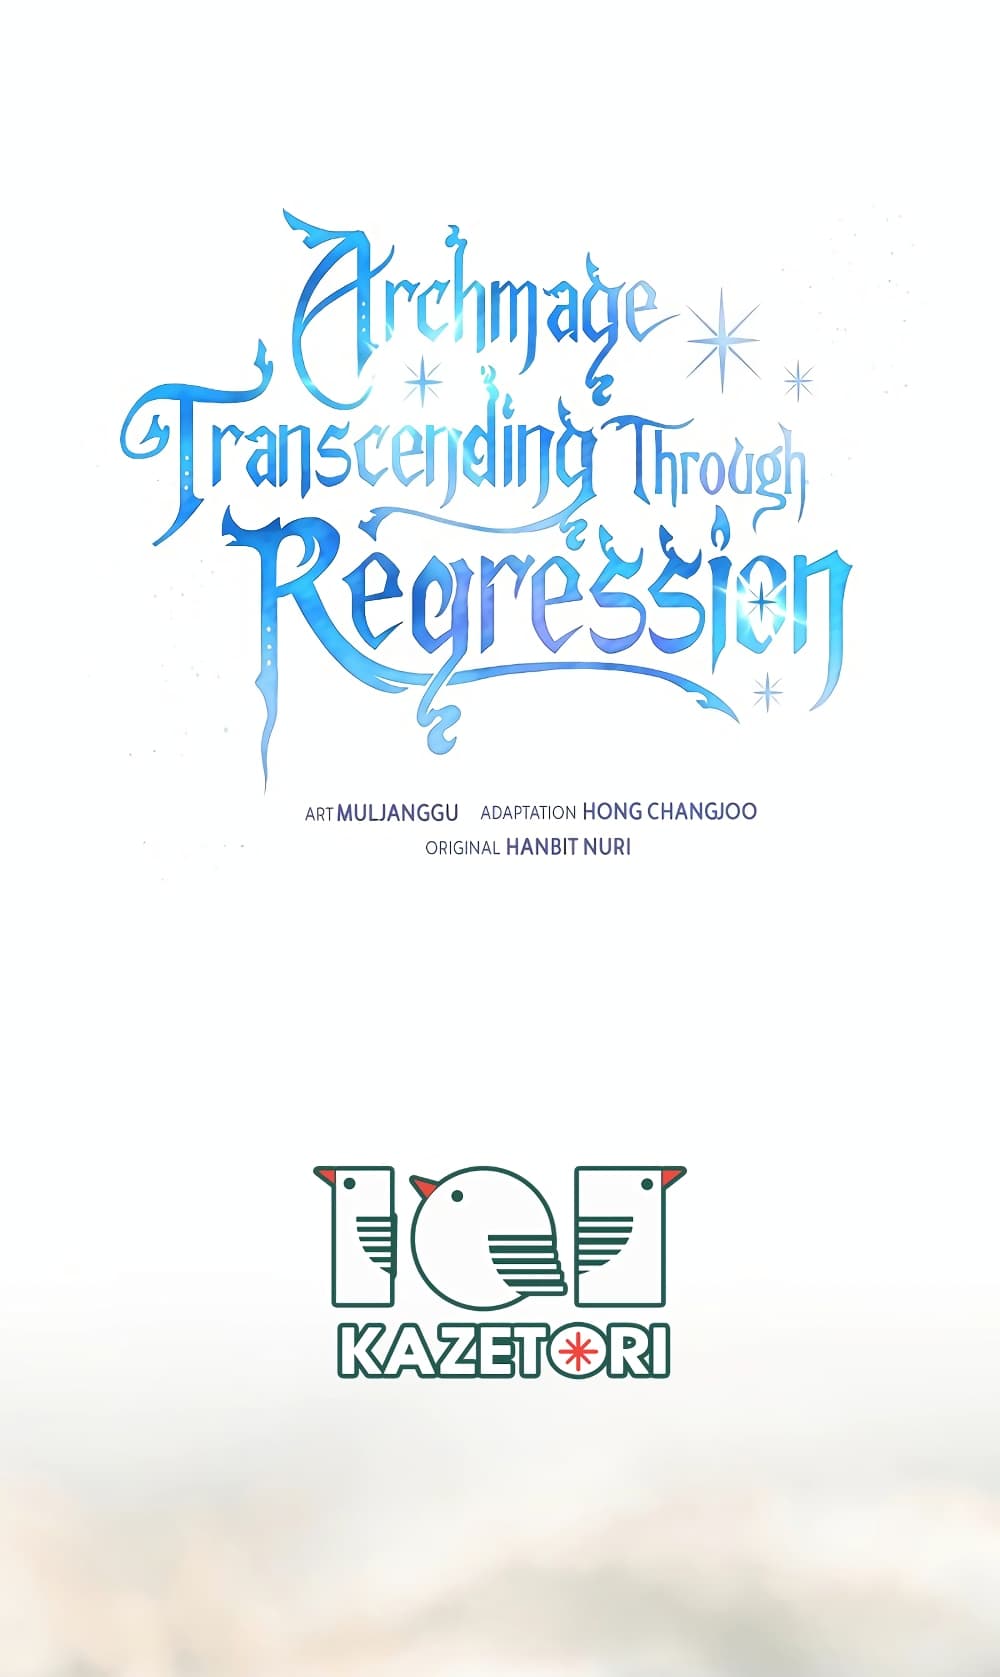 Archmage Transcending Through Regression 92-92